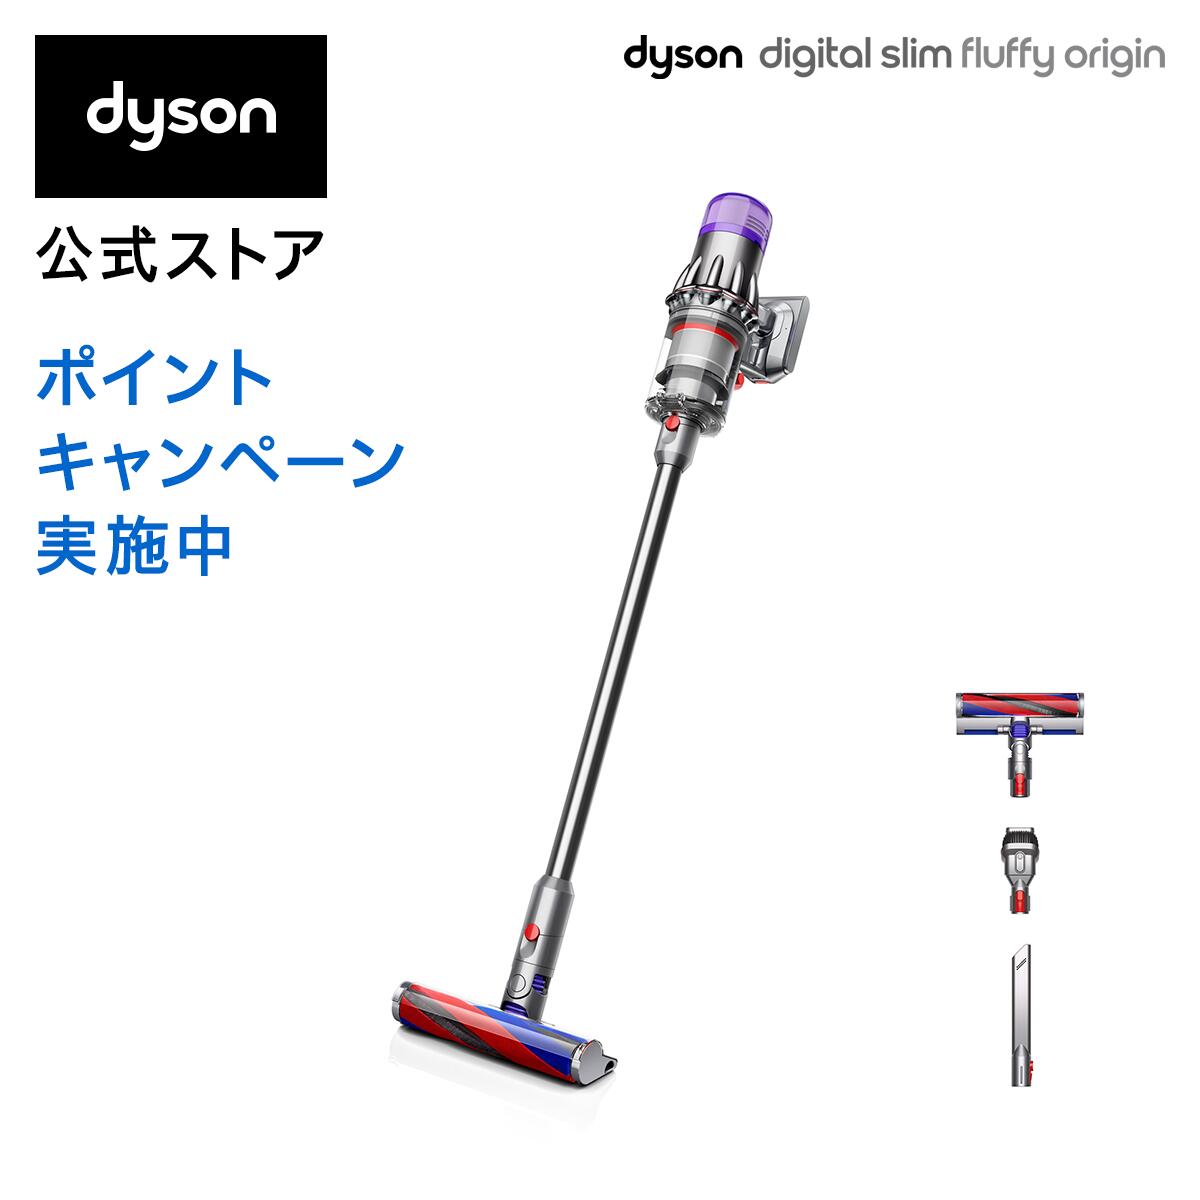 【DEAL対象 10%ポイントバック】 【軽量でパワフル】ダイソン Dyson Digital Slim Fluffy Origin サイクロン式 コードレス掃除機 dyson SV18FFENT N